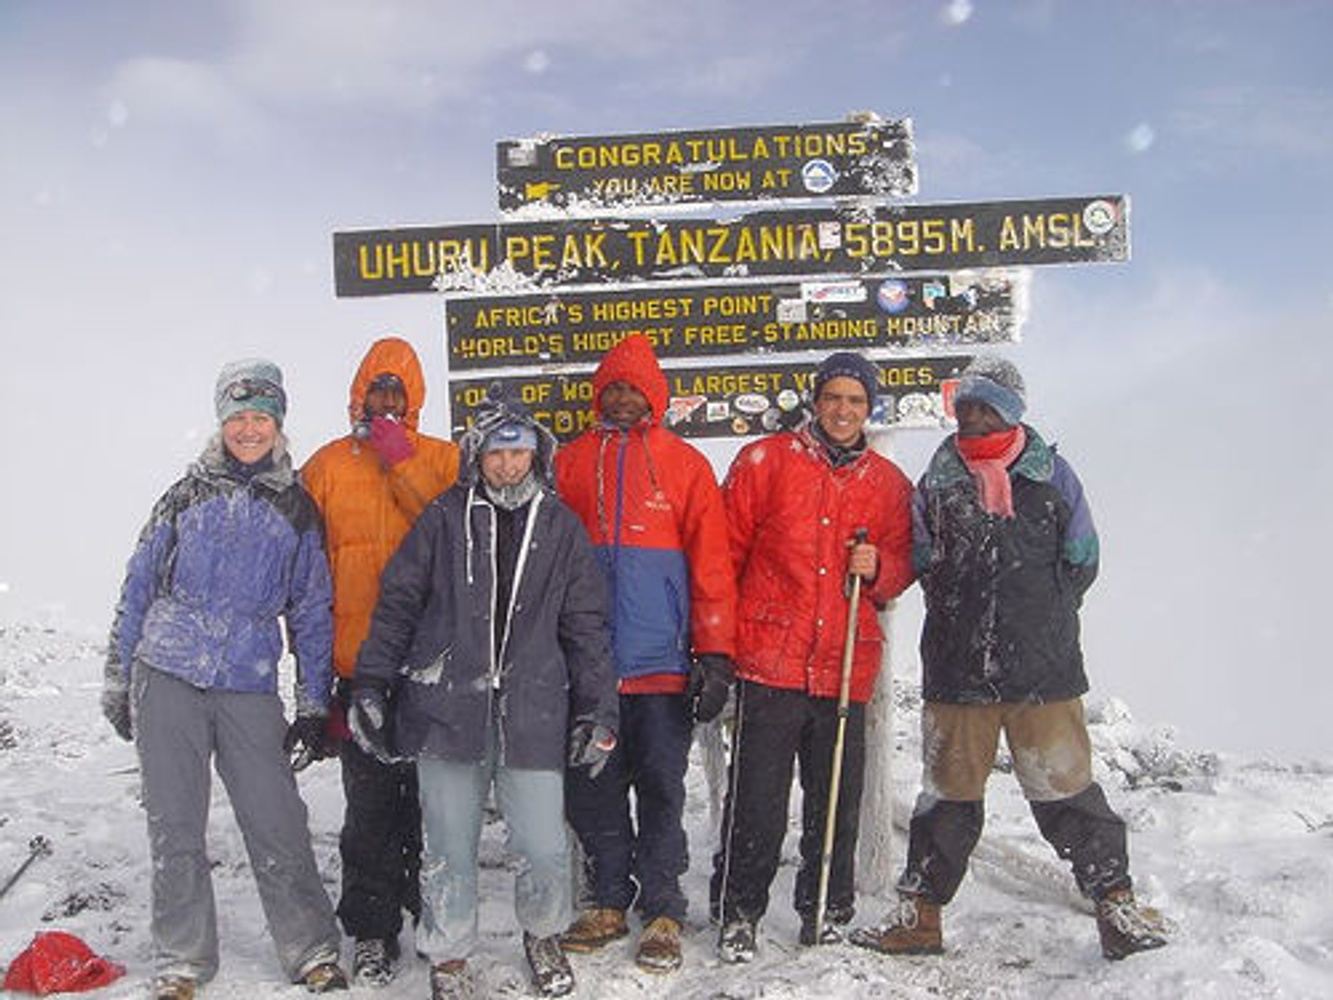 On Top of Africa Mt. Kilimanjaro